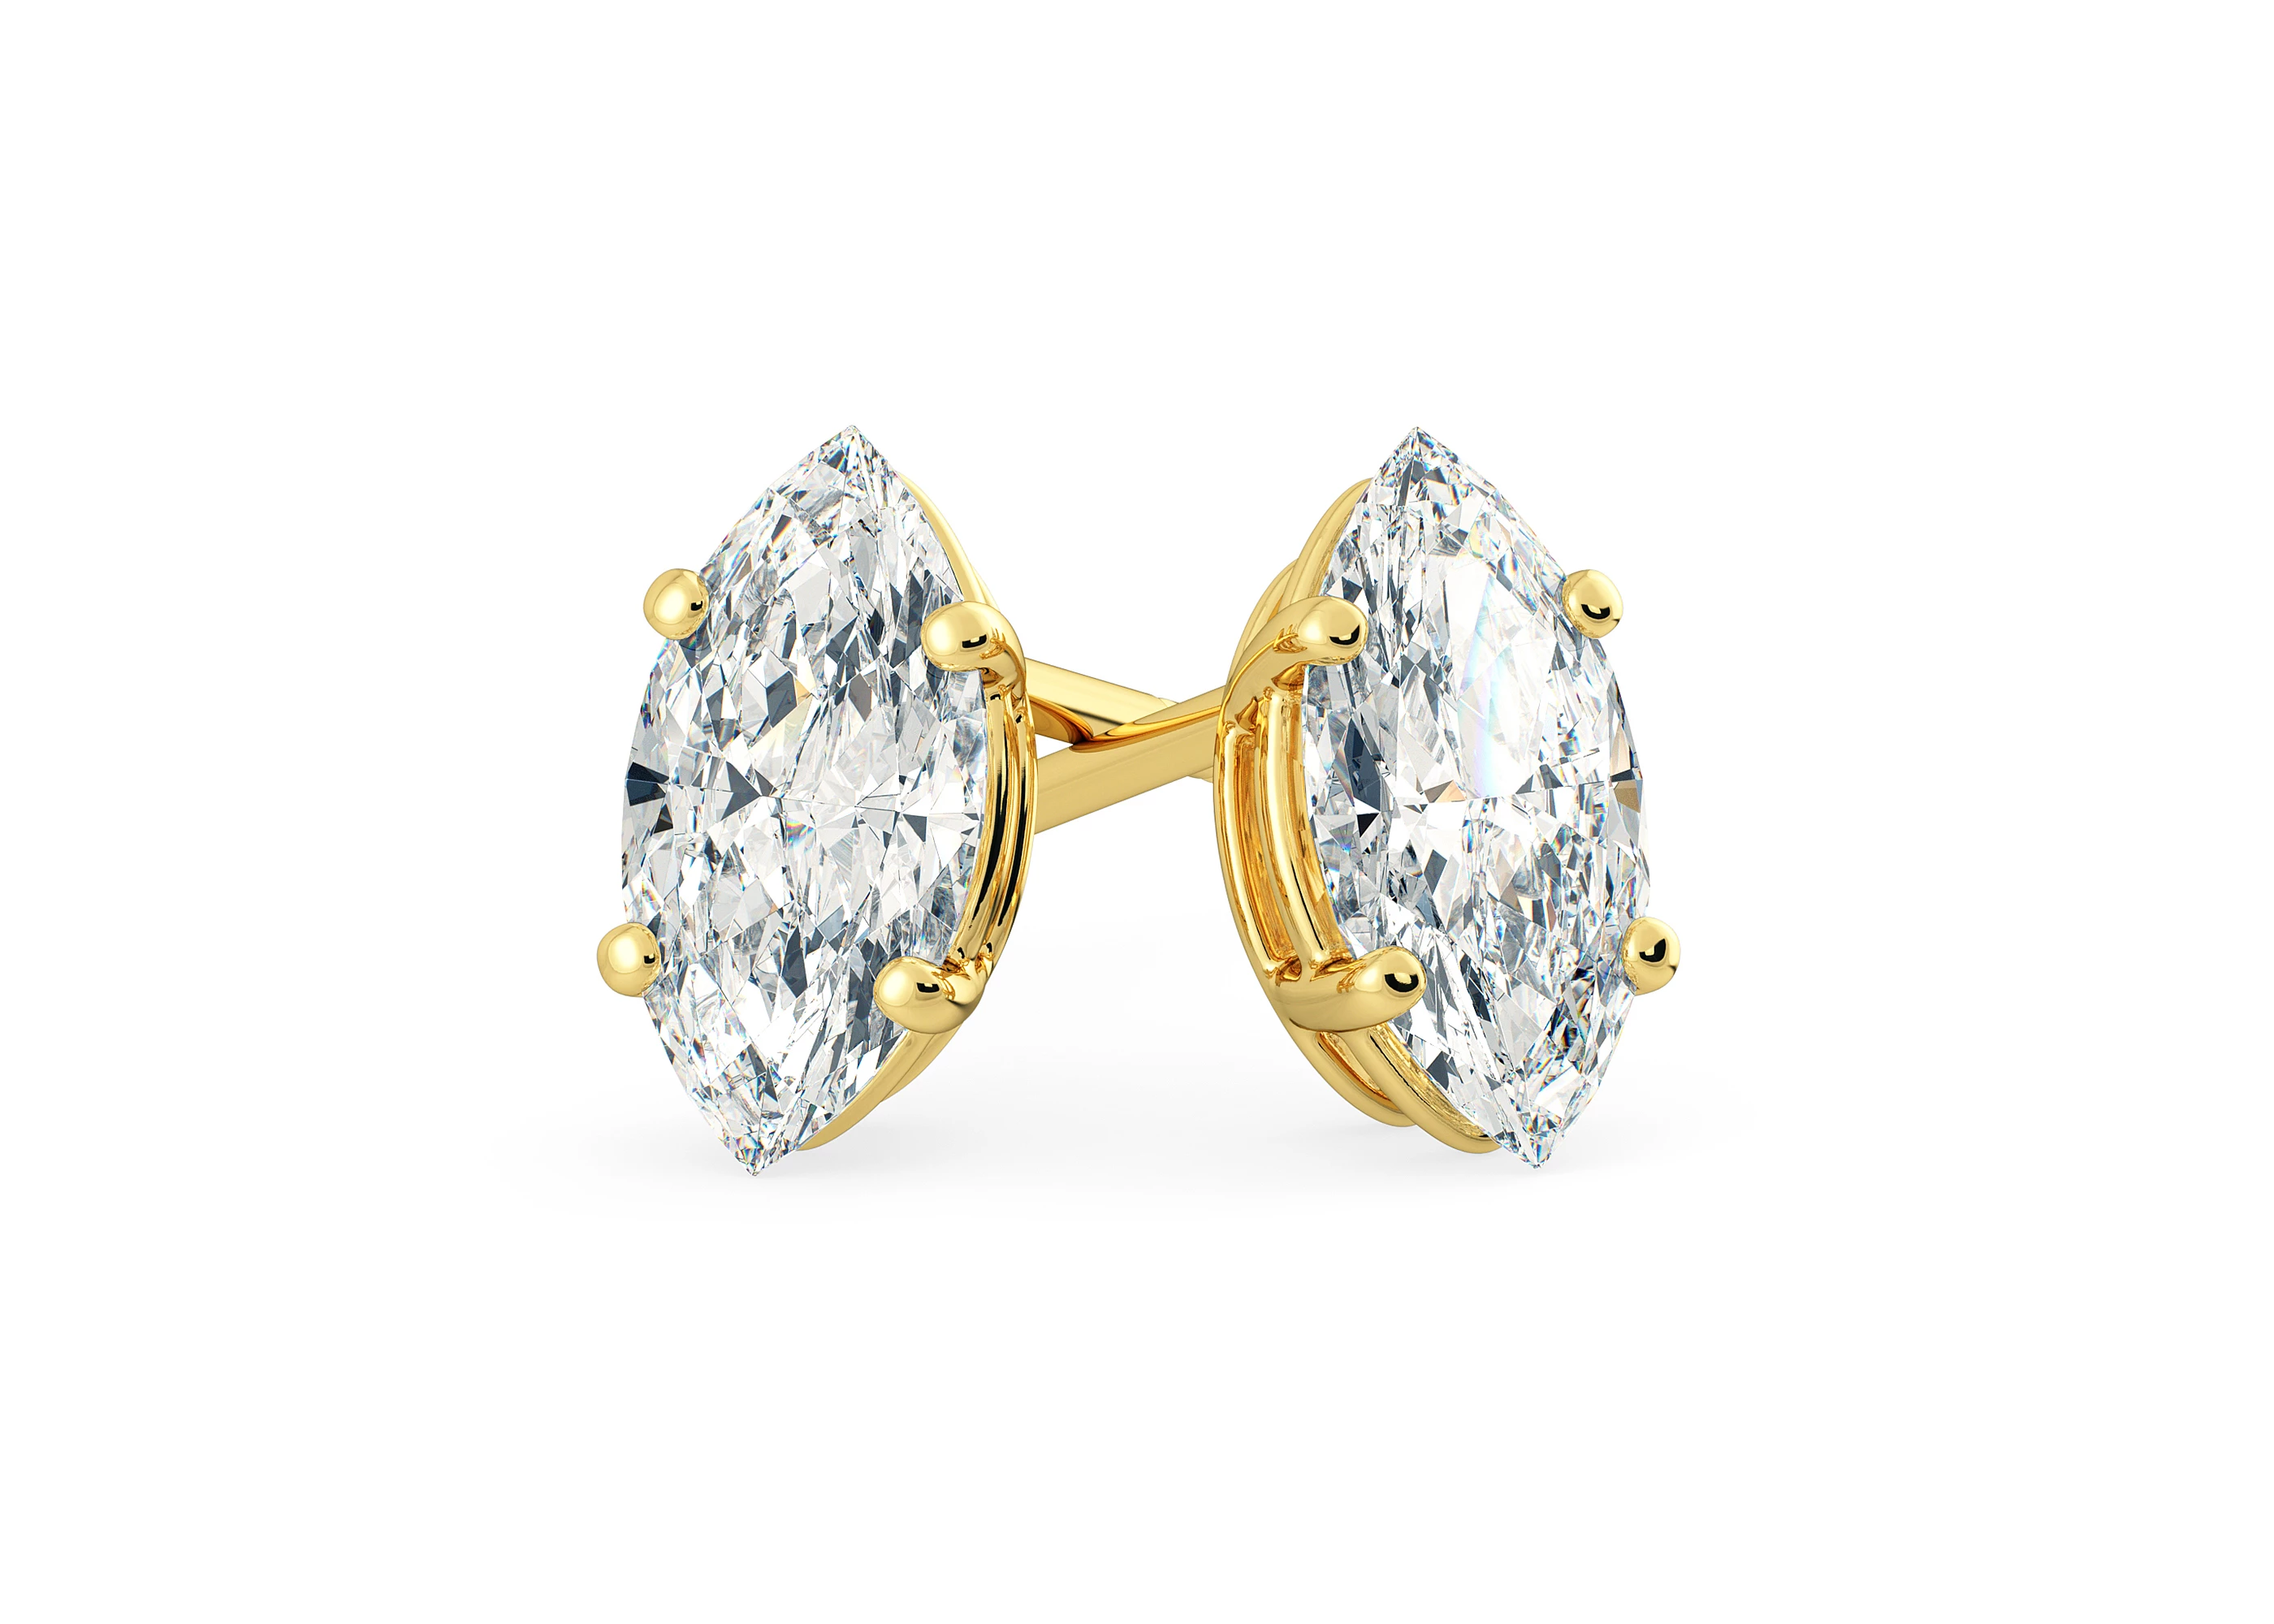 Half Carat Marquise Diamond Stud Earrings in 18K Yellow Gold